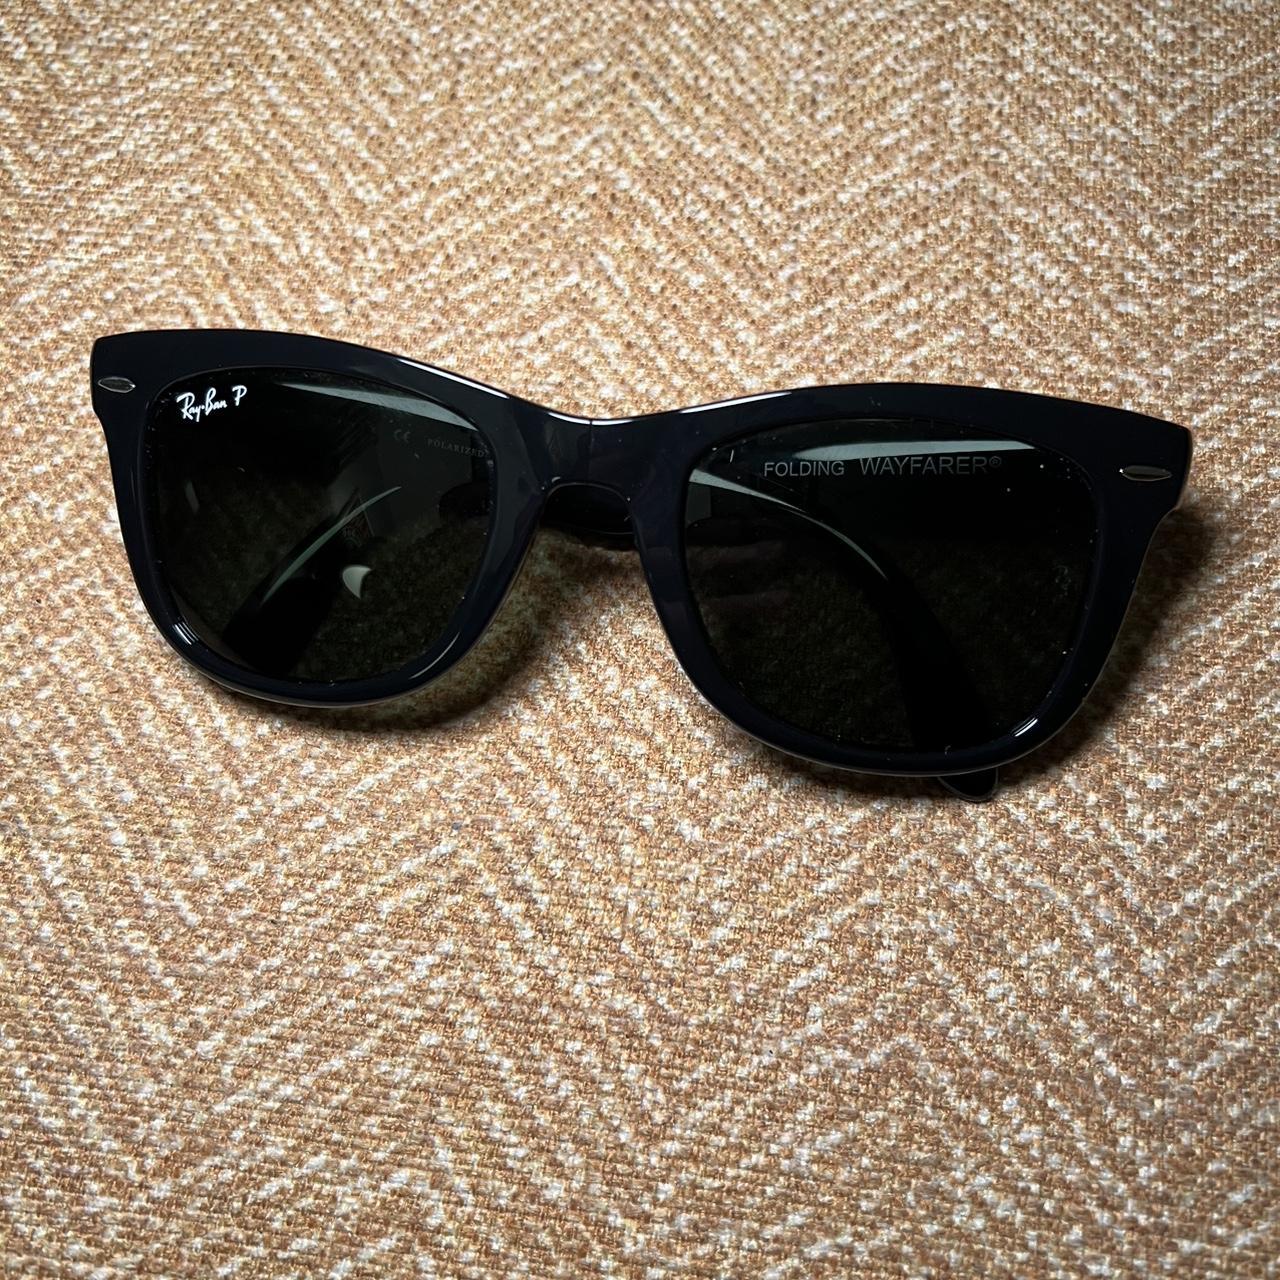 Folding Ray-Ban polarized sunglasses. Only worn a... - Depop